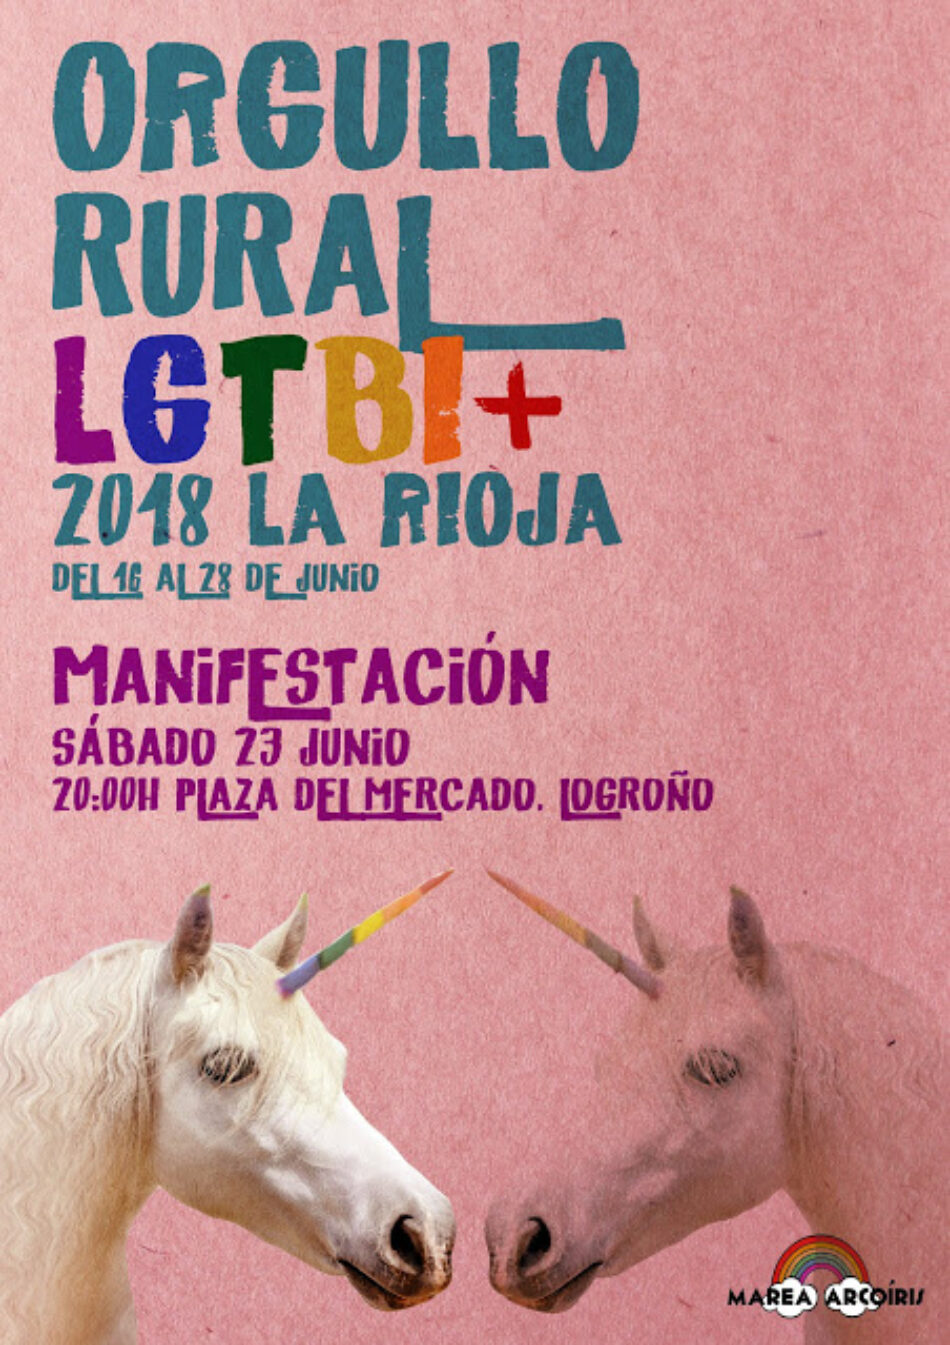 Agenda Cultural Orgullo Rural LGTBI+ La Rioja